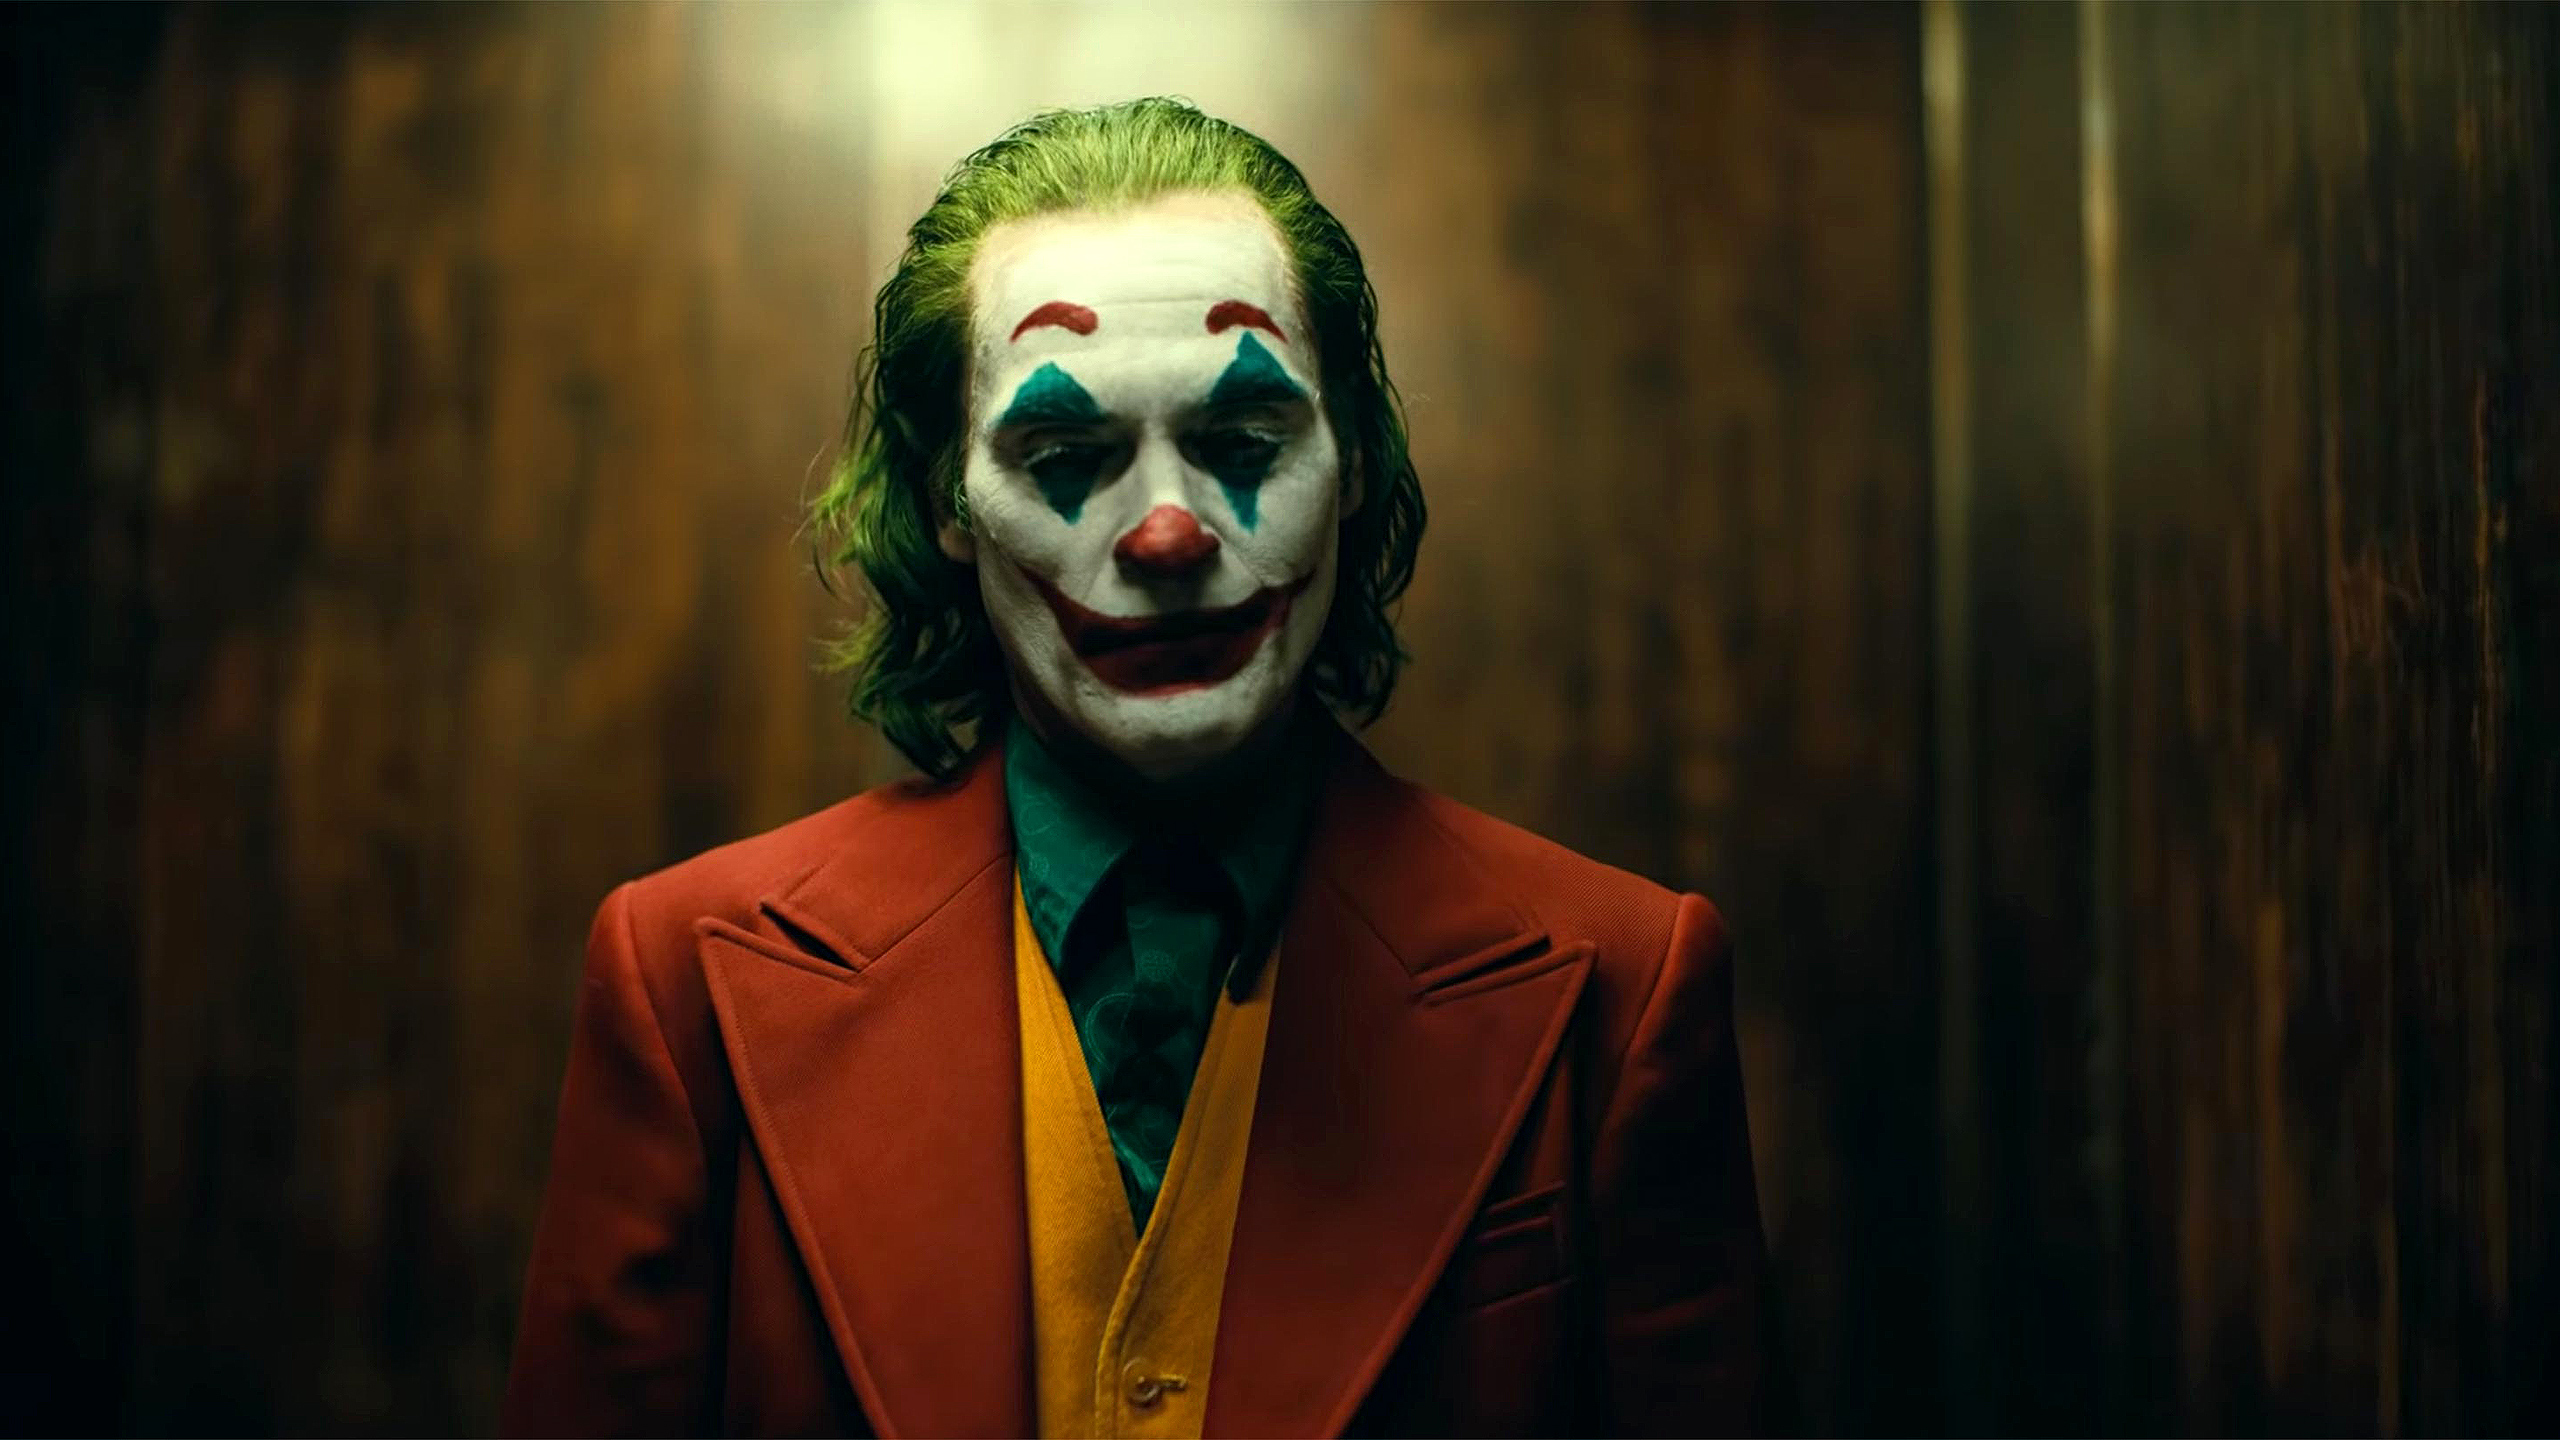 Joker 2019 Movies 4k Wallpapers - HD Wallpapers